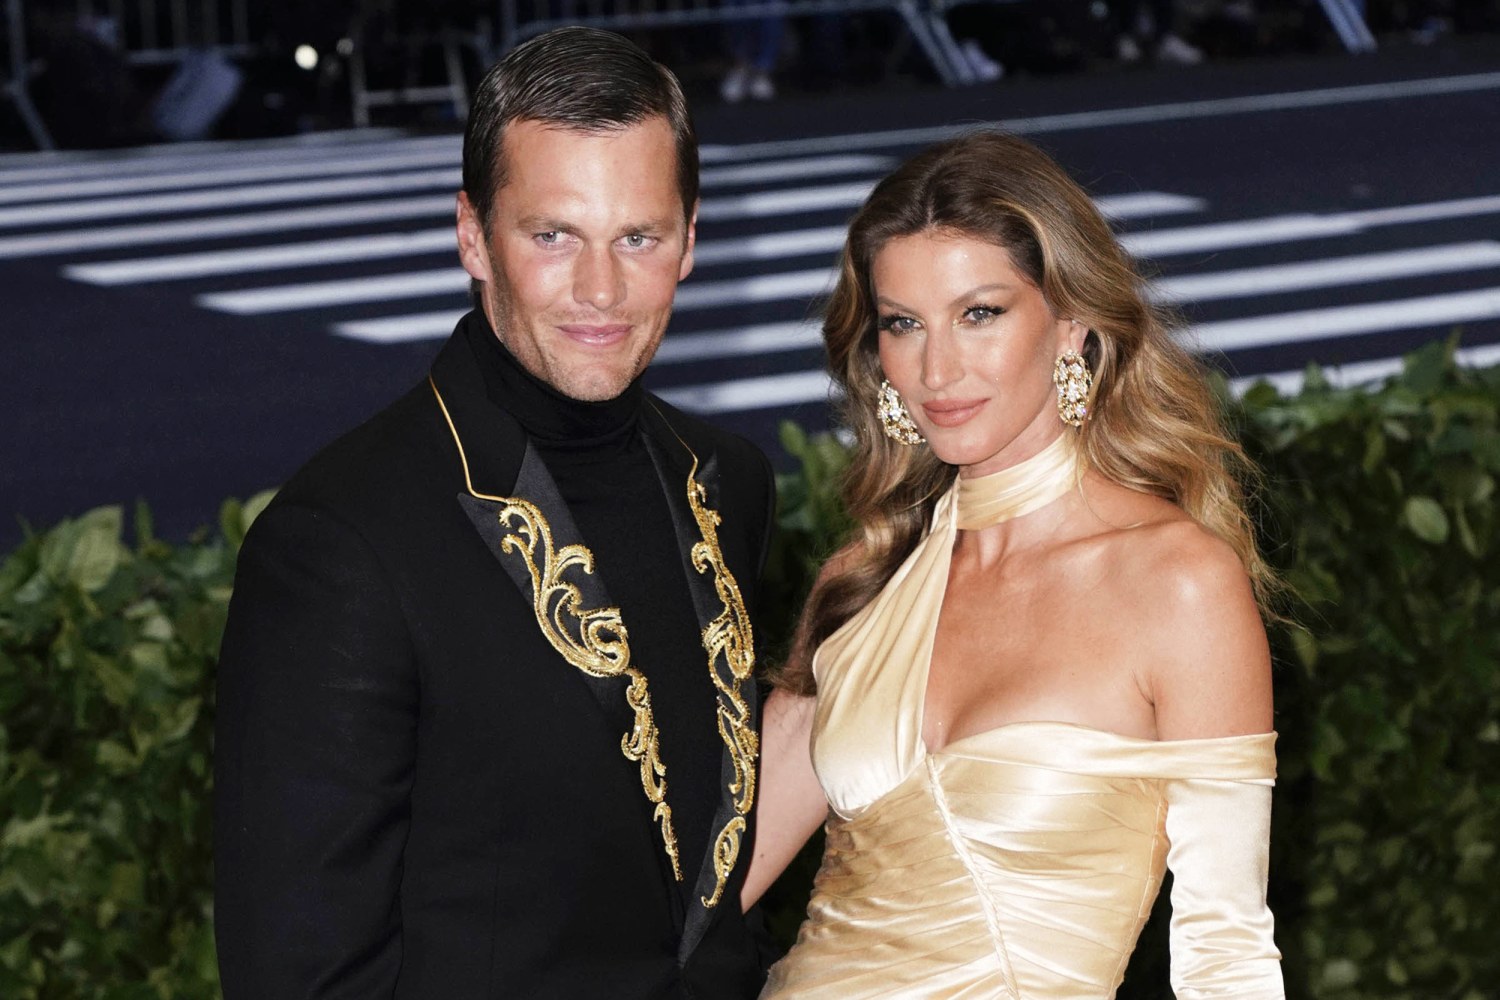 Tom Brady and Gisele Bündchen both hiring divorce attorneys